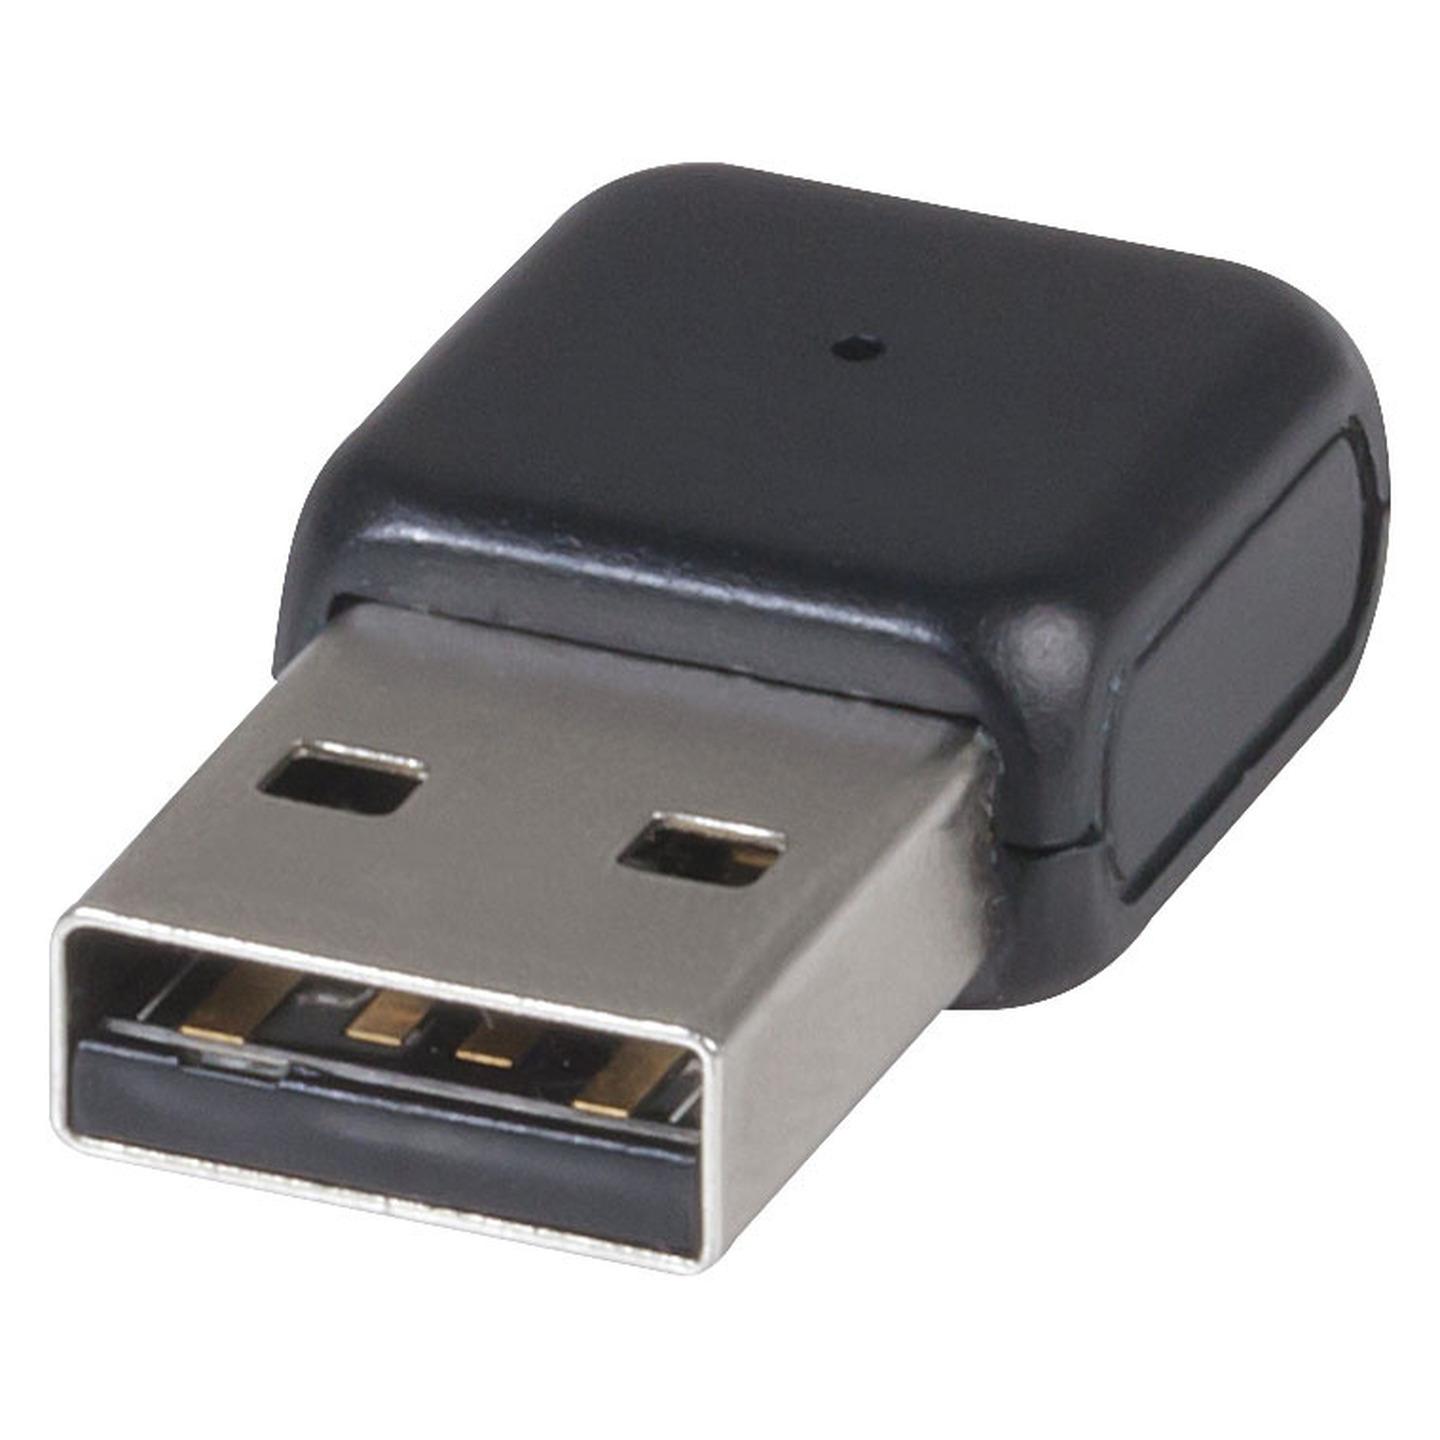 Compact USB Dual Band Wi-Fi Dongle